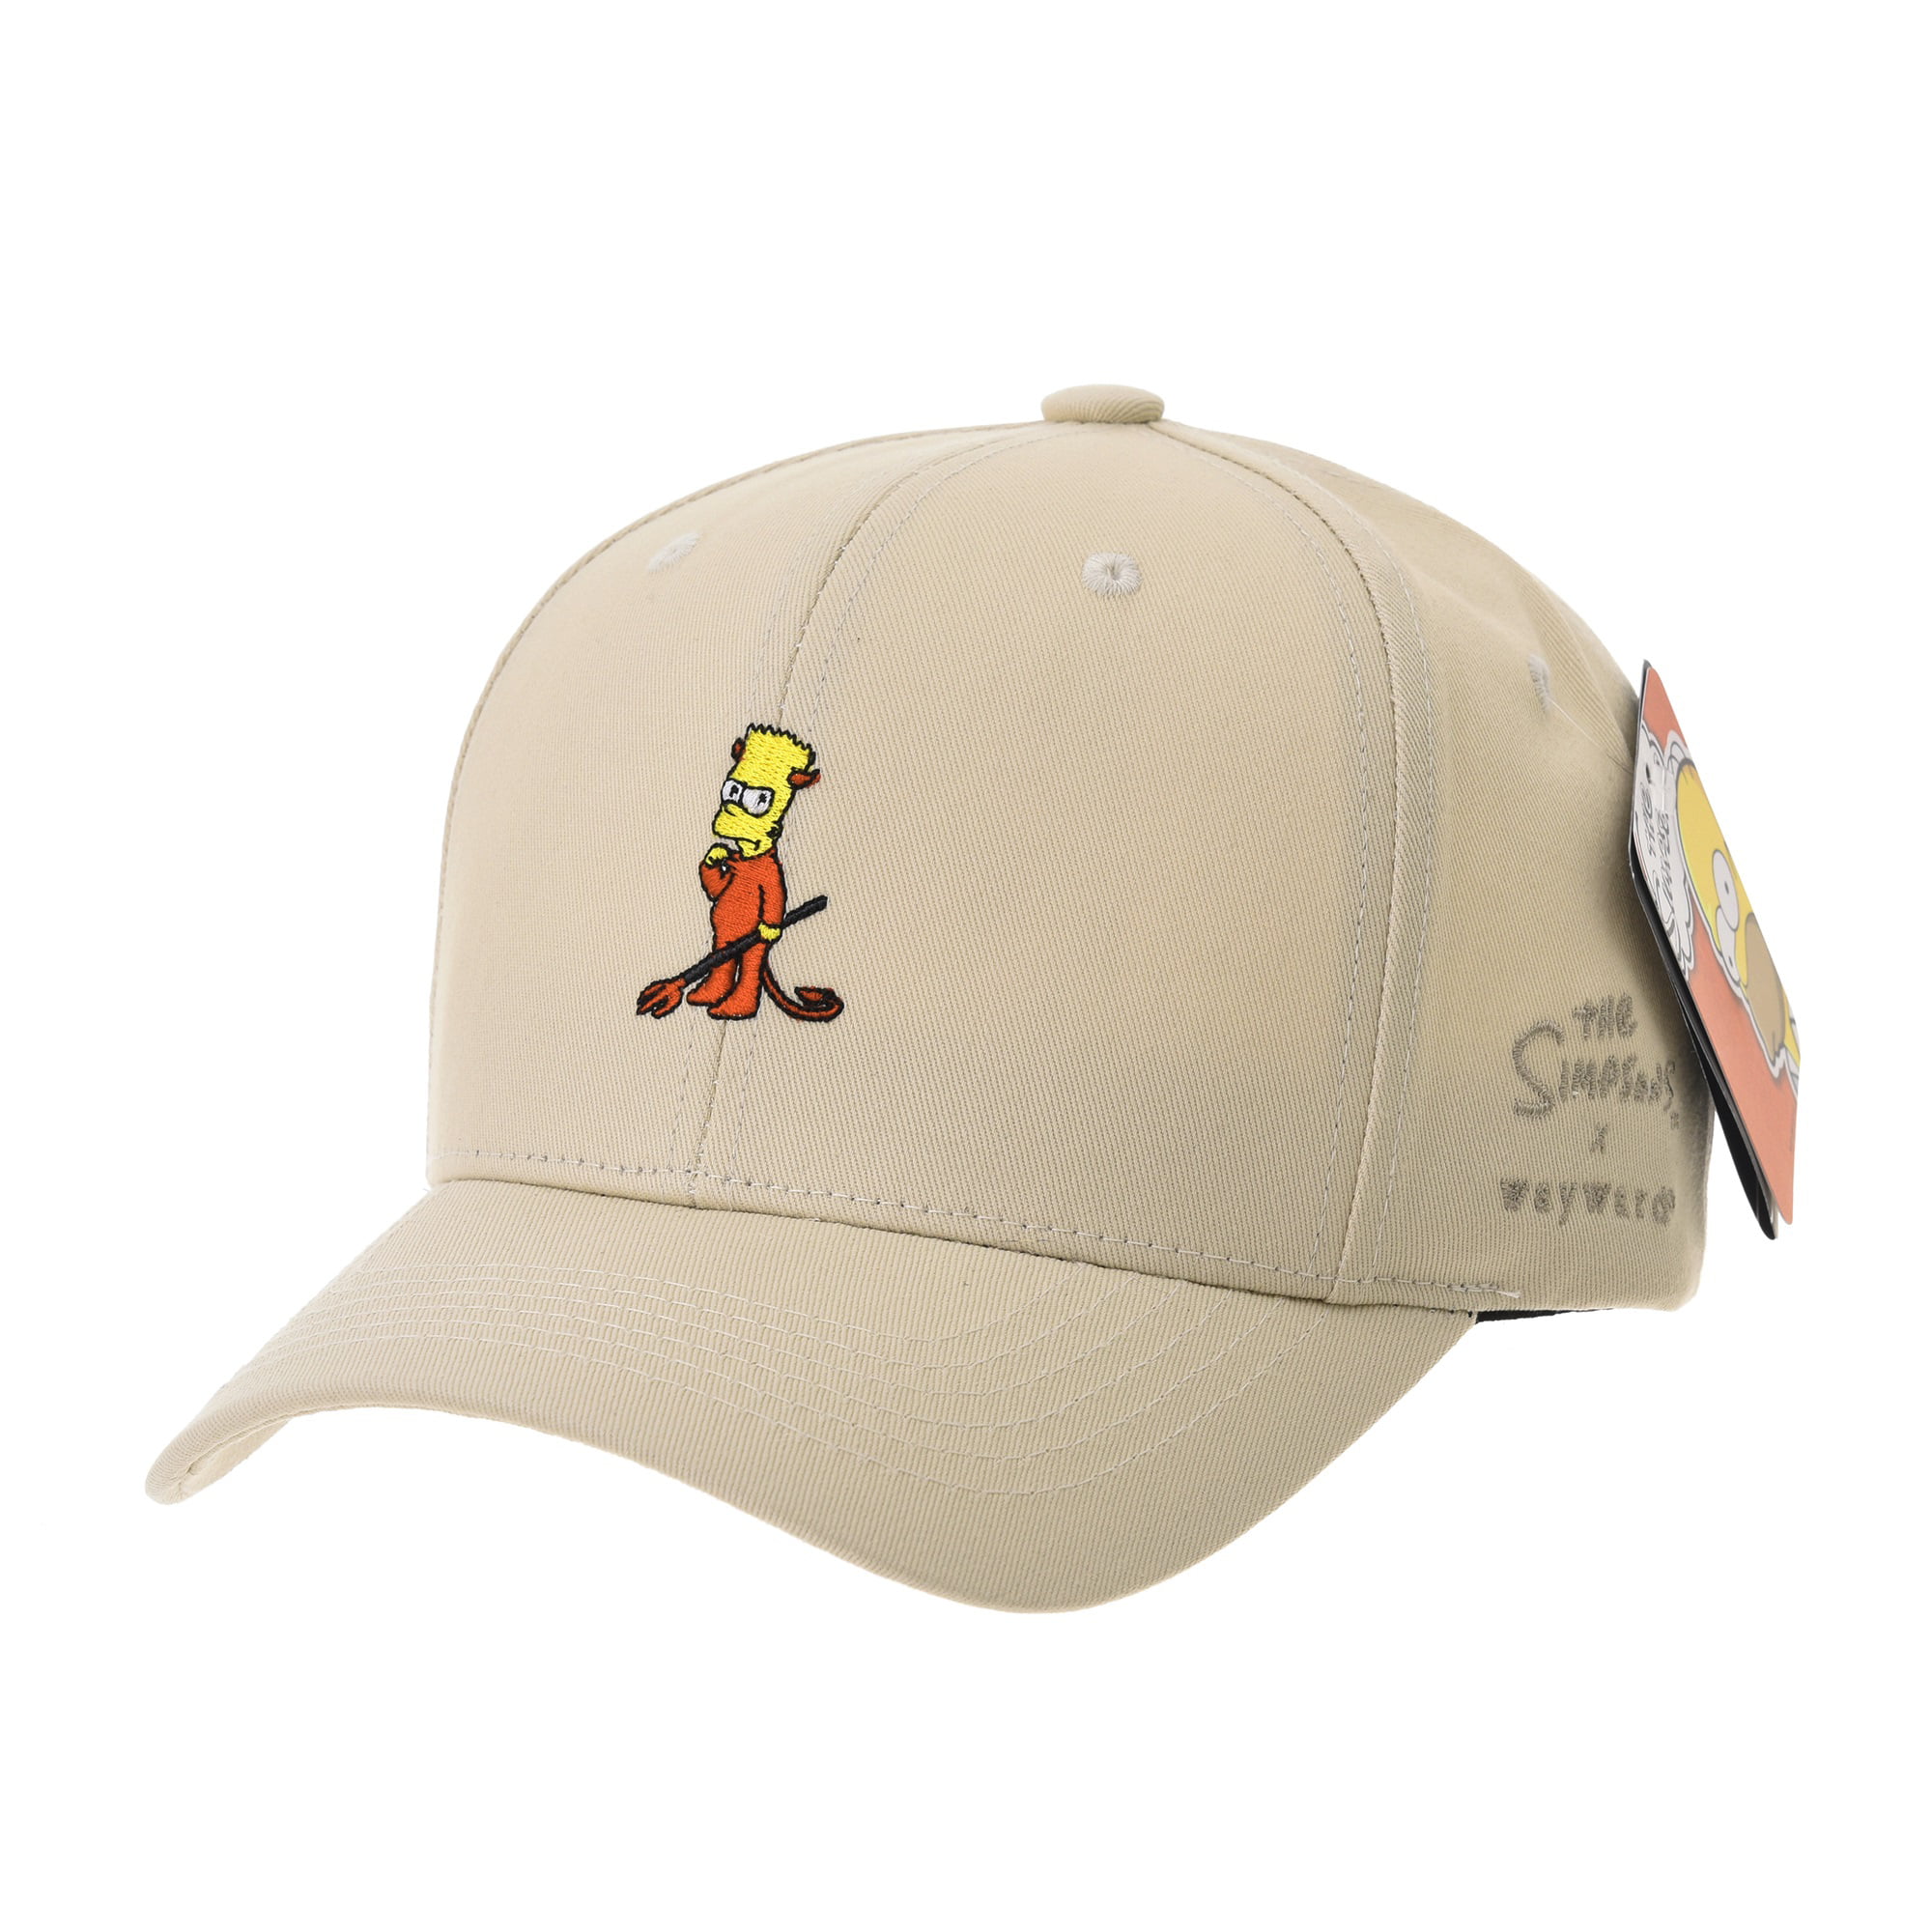 Bart-Simpson Flat-Brimmed Baseball Cap Trucker Hat